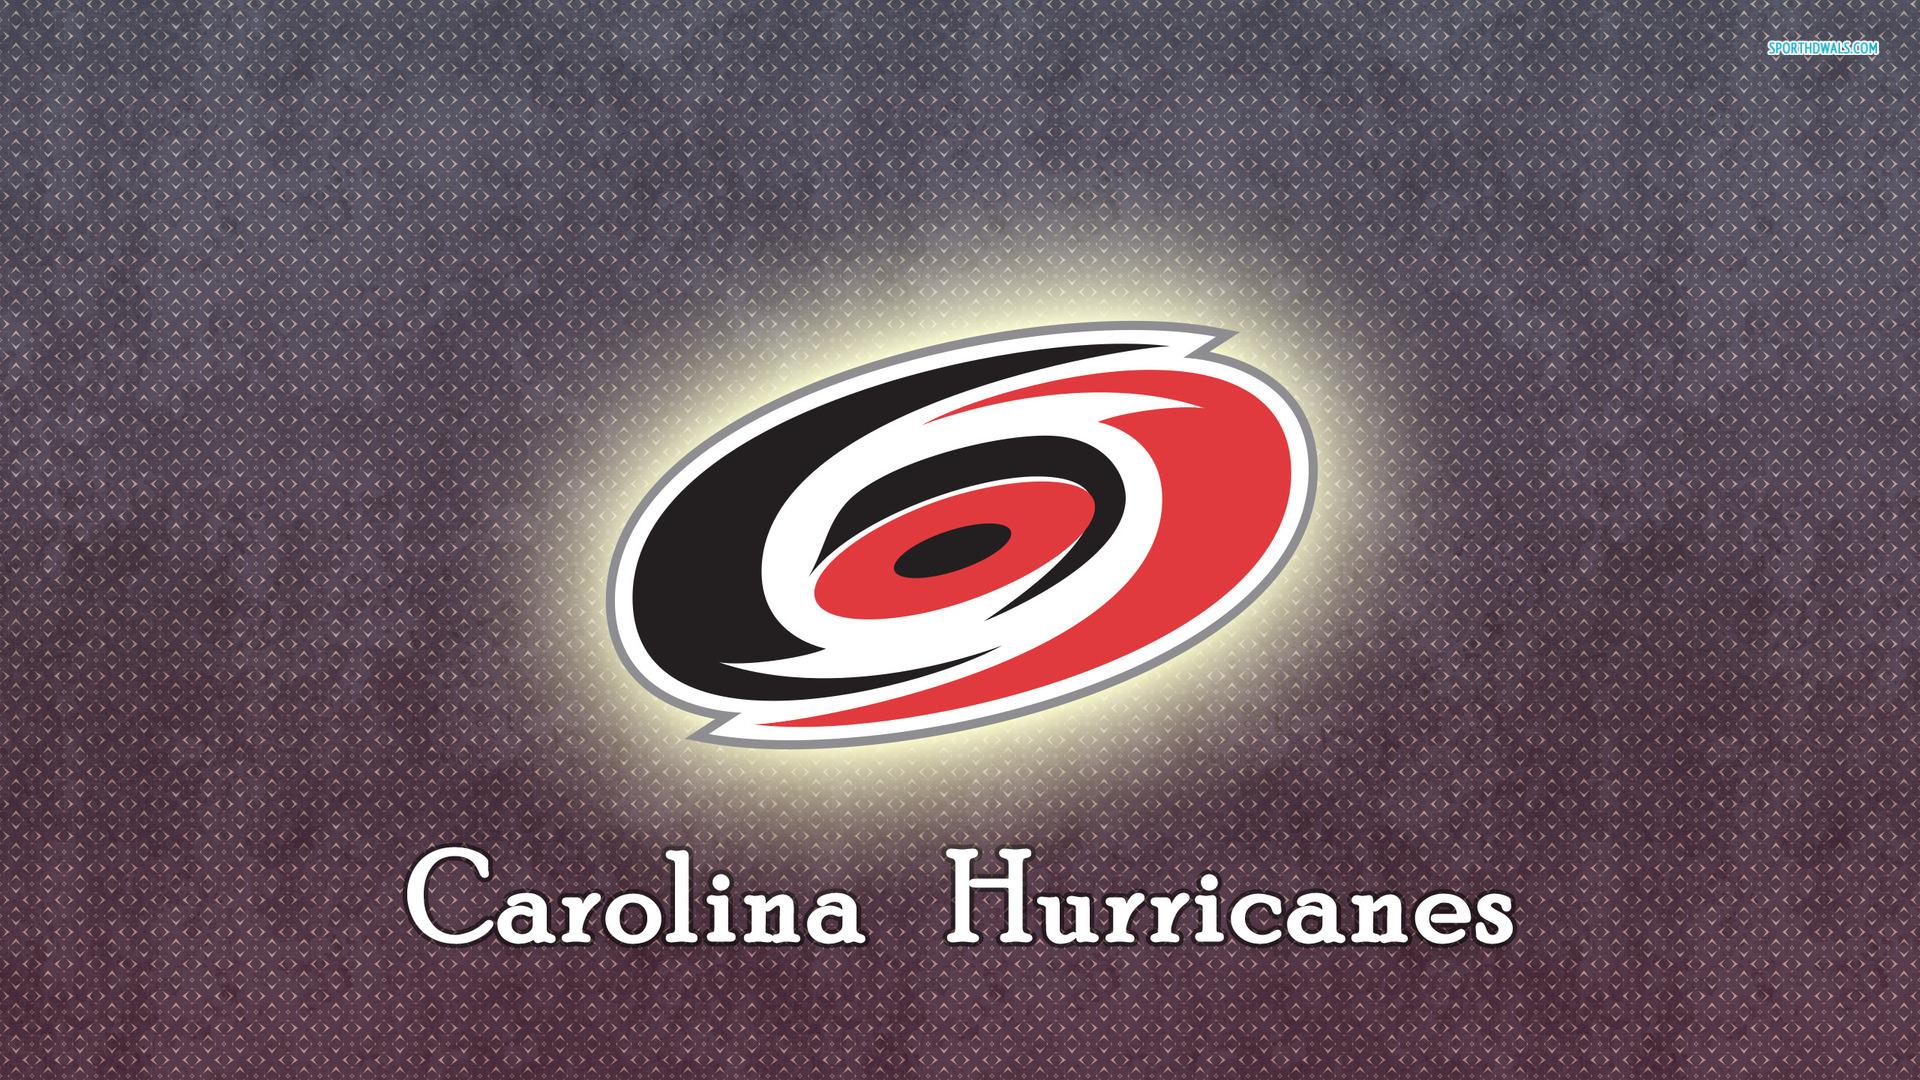 Carolina Hurricanes Wallpaper. Carolina Hurricanes Wallpaper